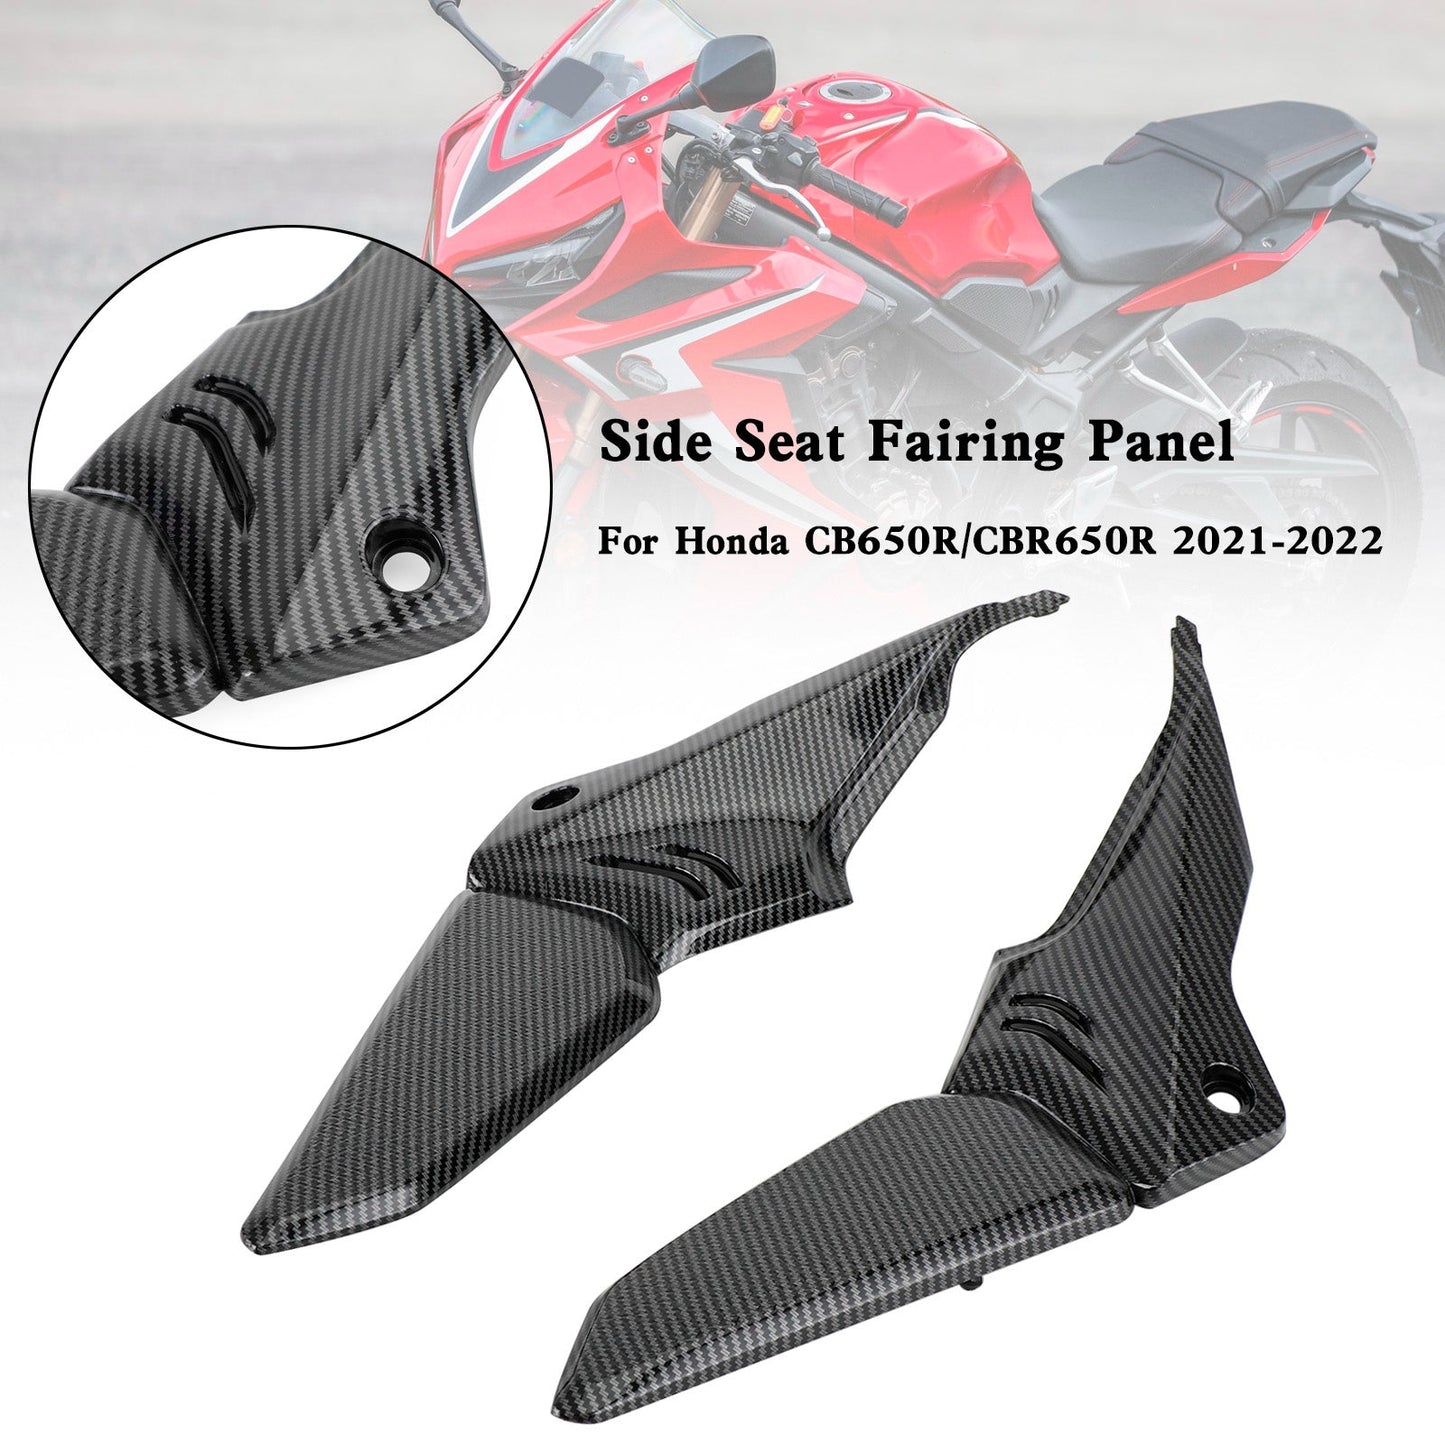 Honda CB650R CBR650R 2021-2022 Front Side Seat Fairing Gas Tank Panel Fedex Express